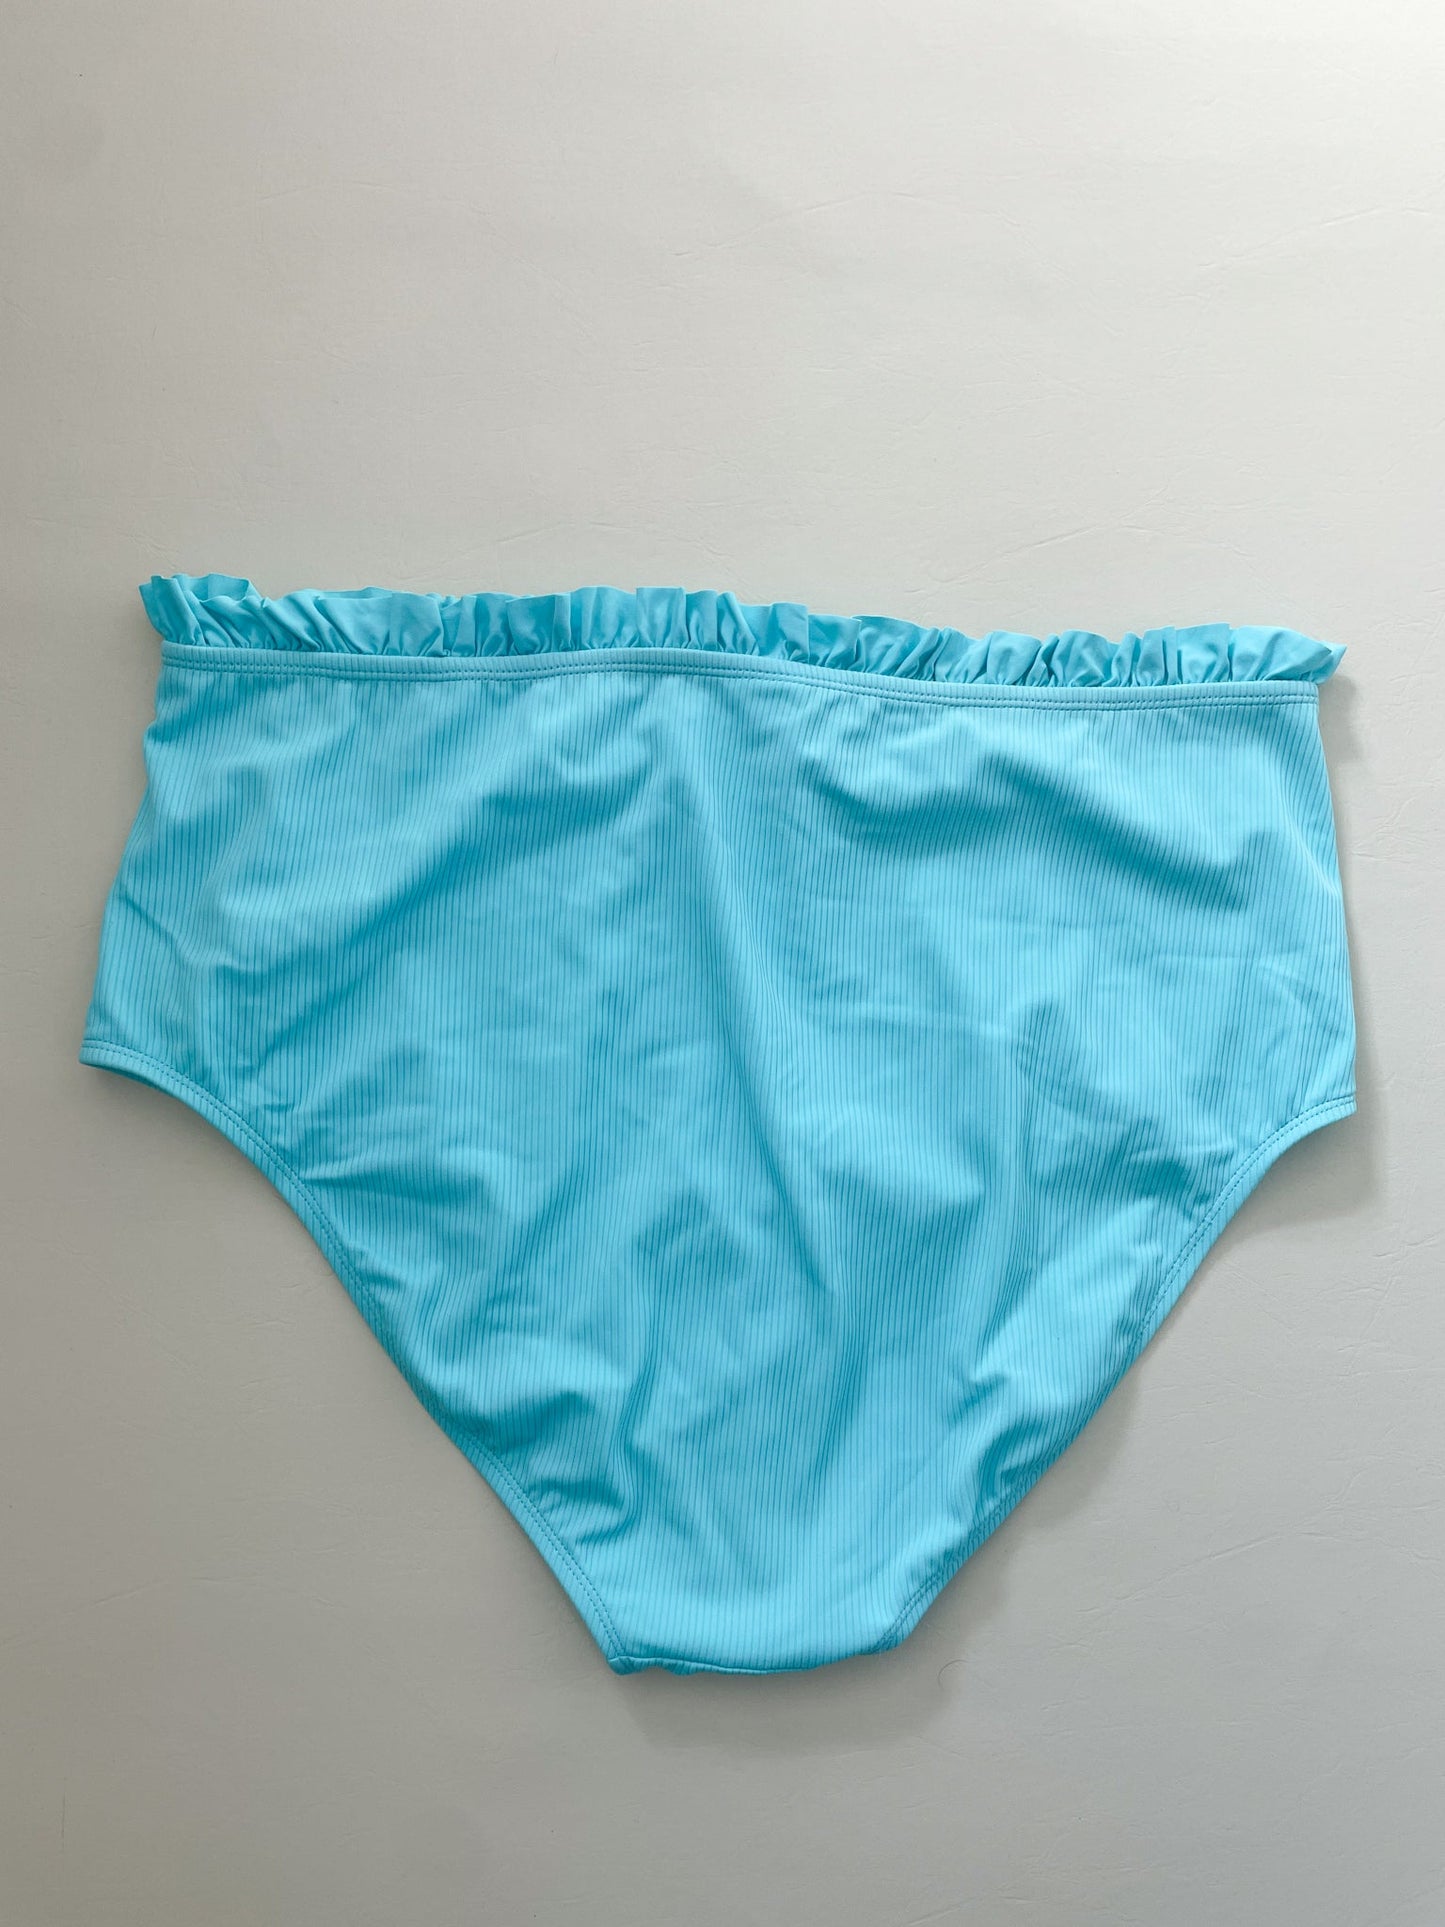 Ibiza Light Blue Ruffled High Waist Bikini Bottoms NWOT - 3X